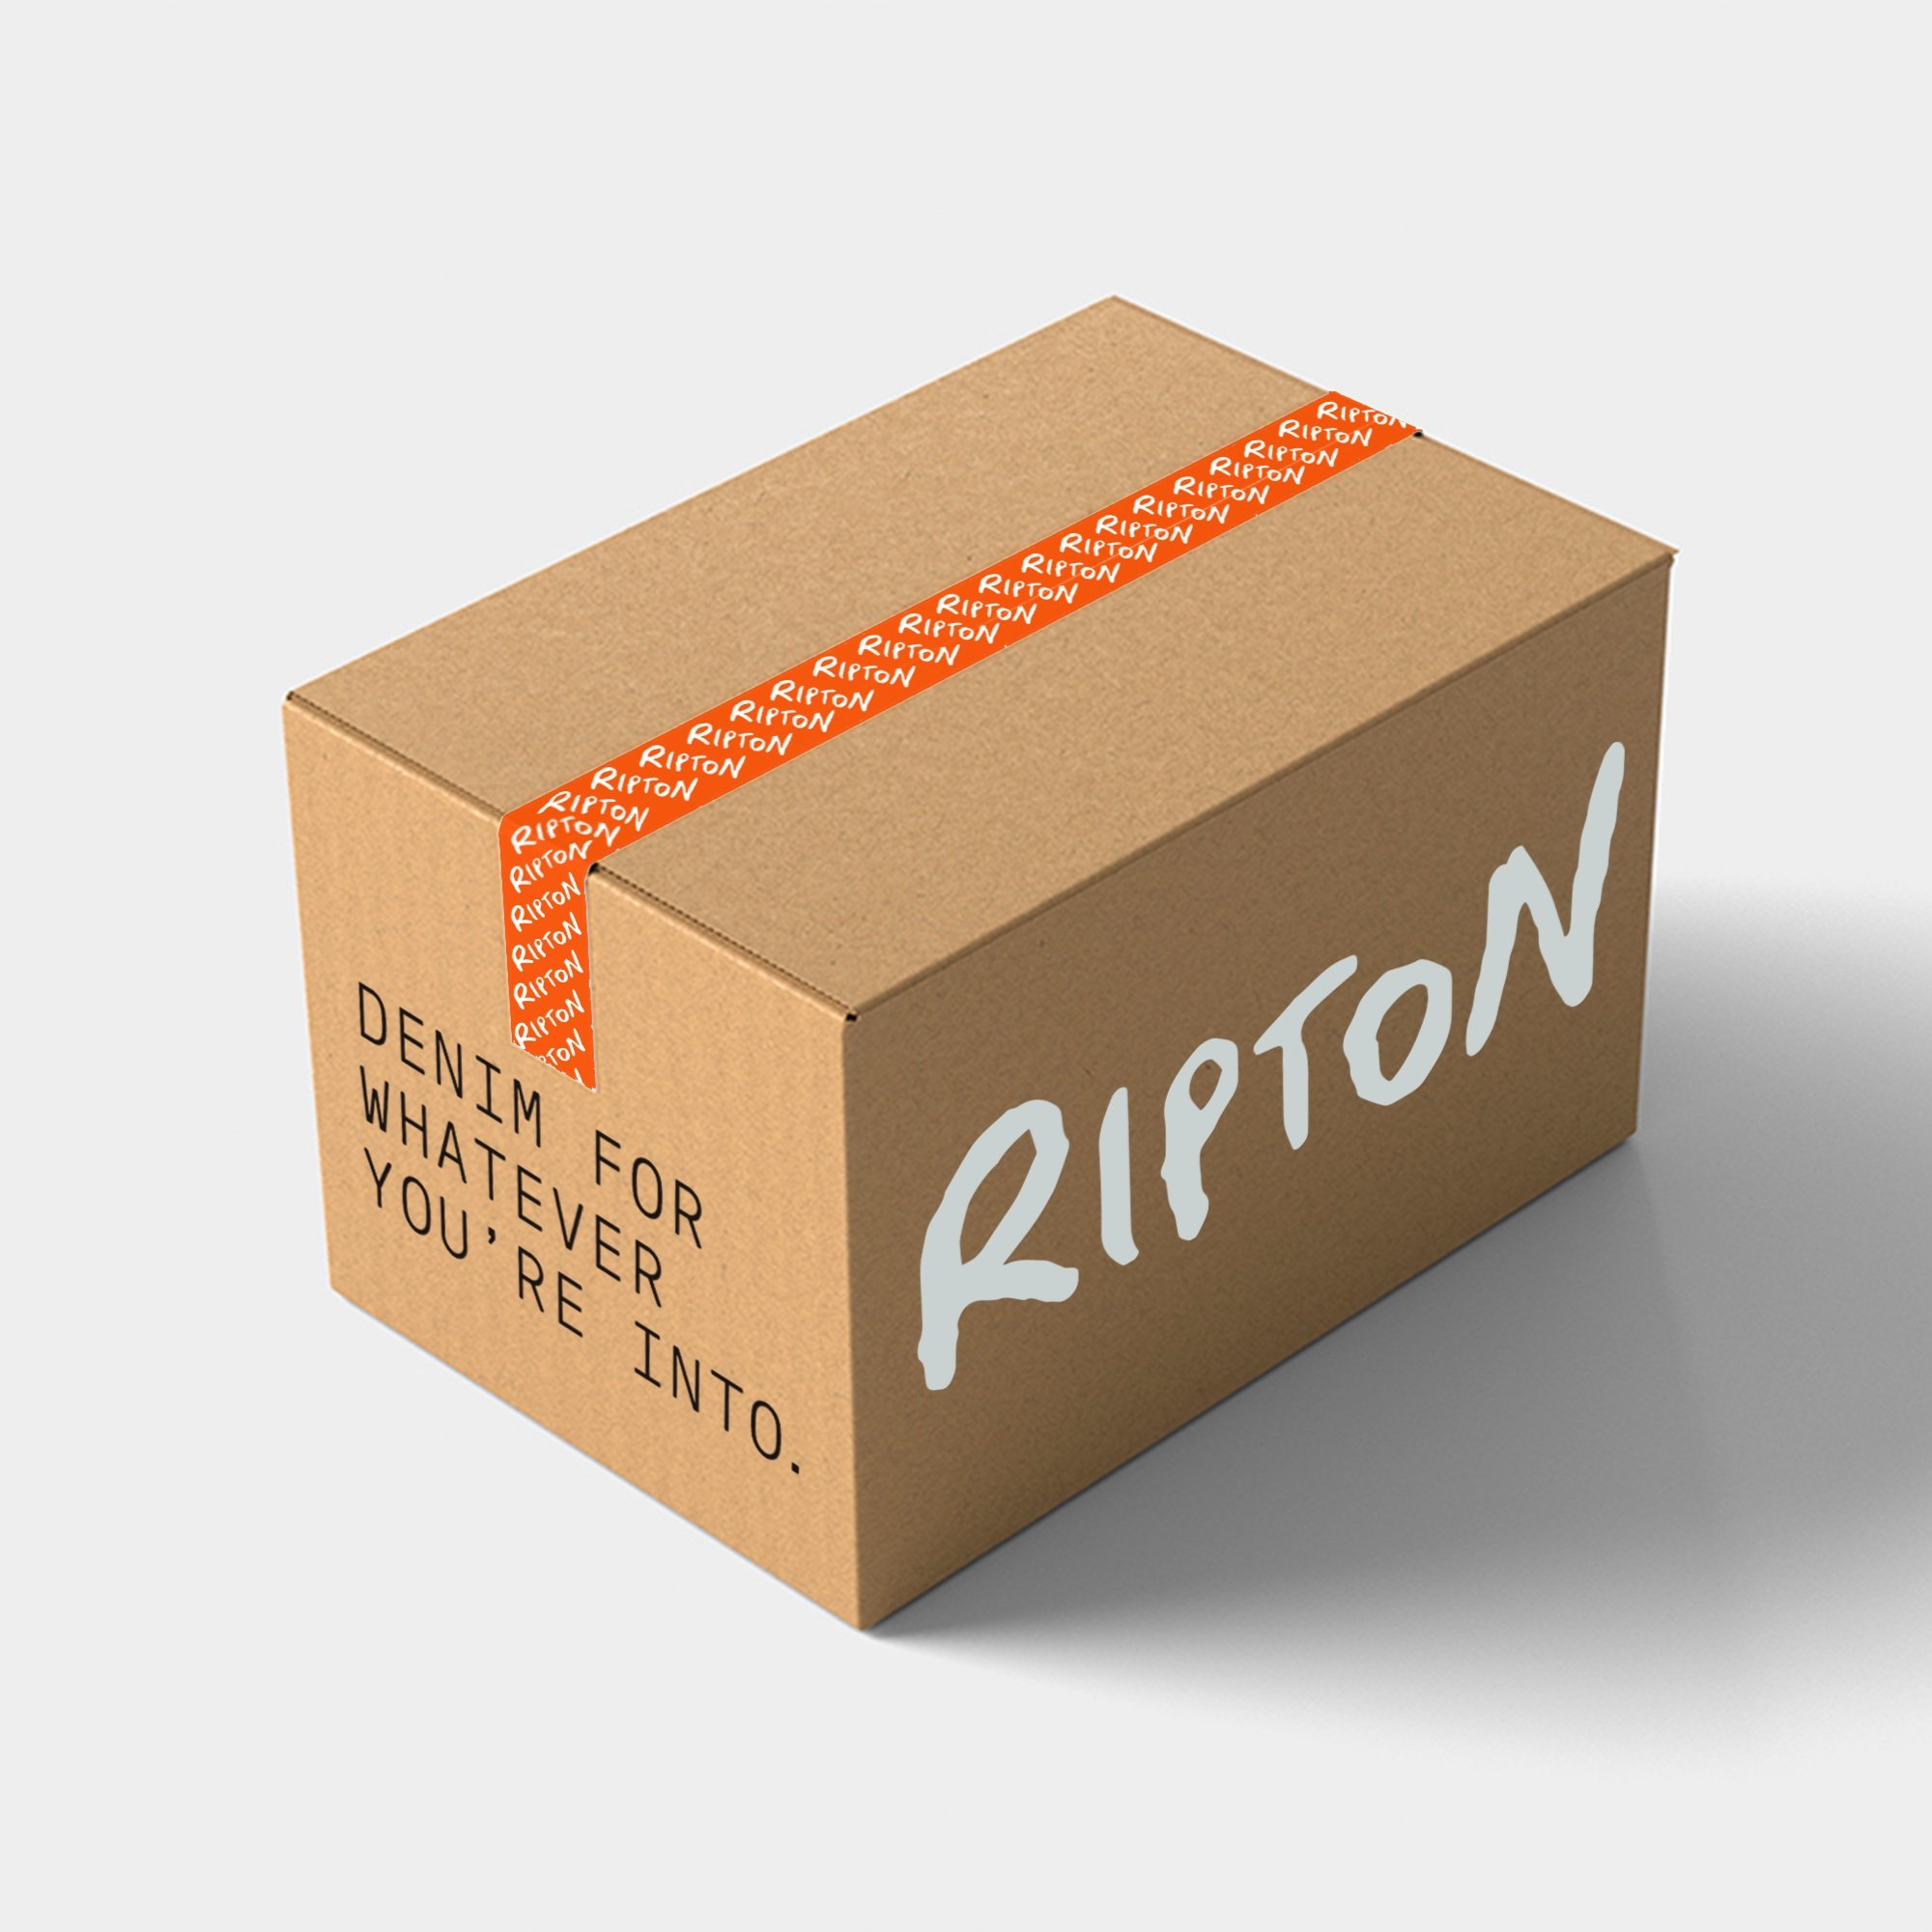 Ripton Shipping Box.png